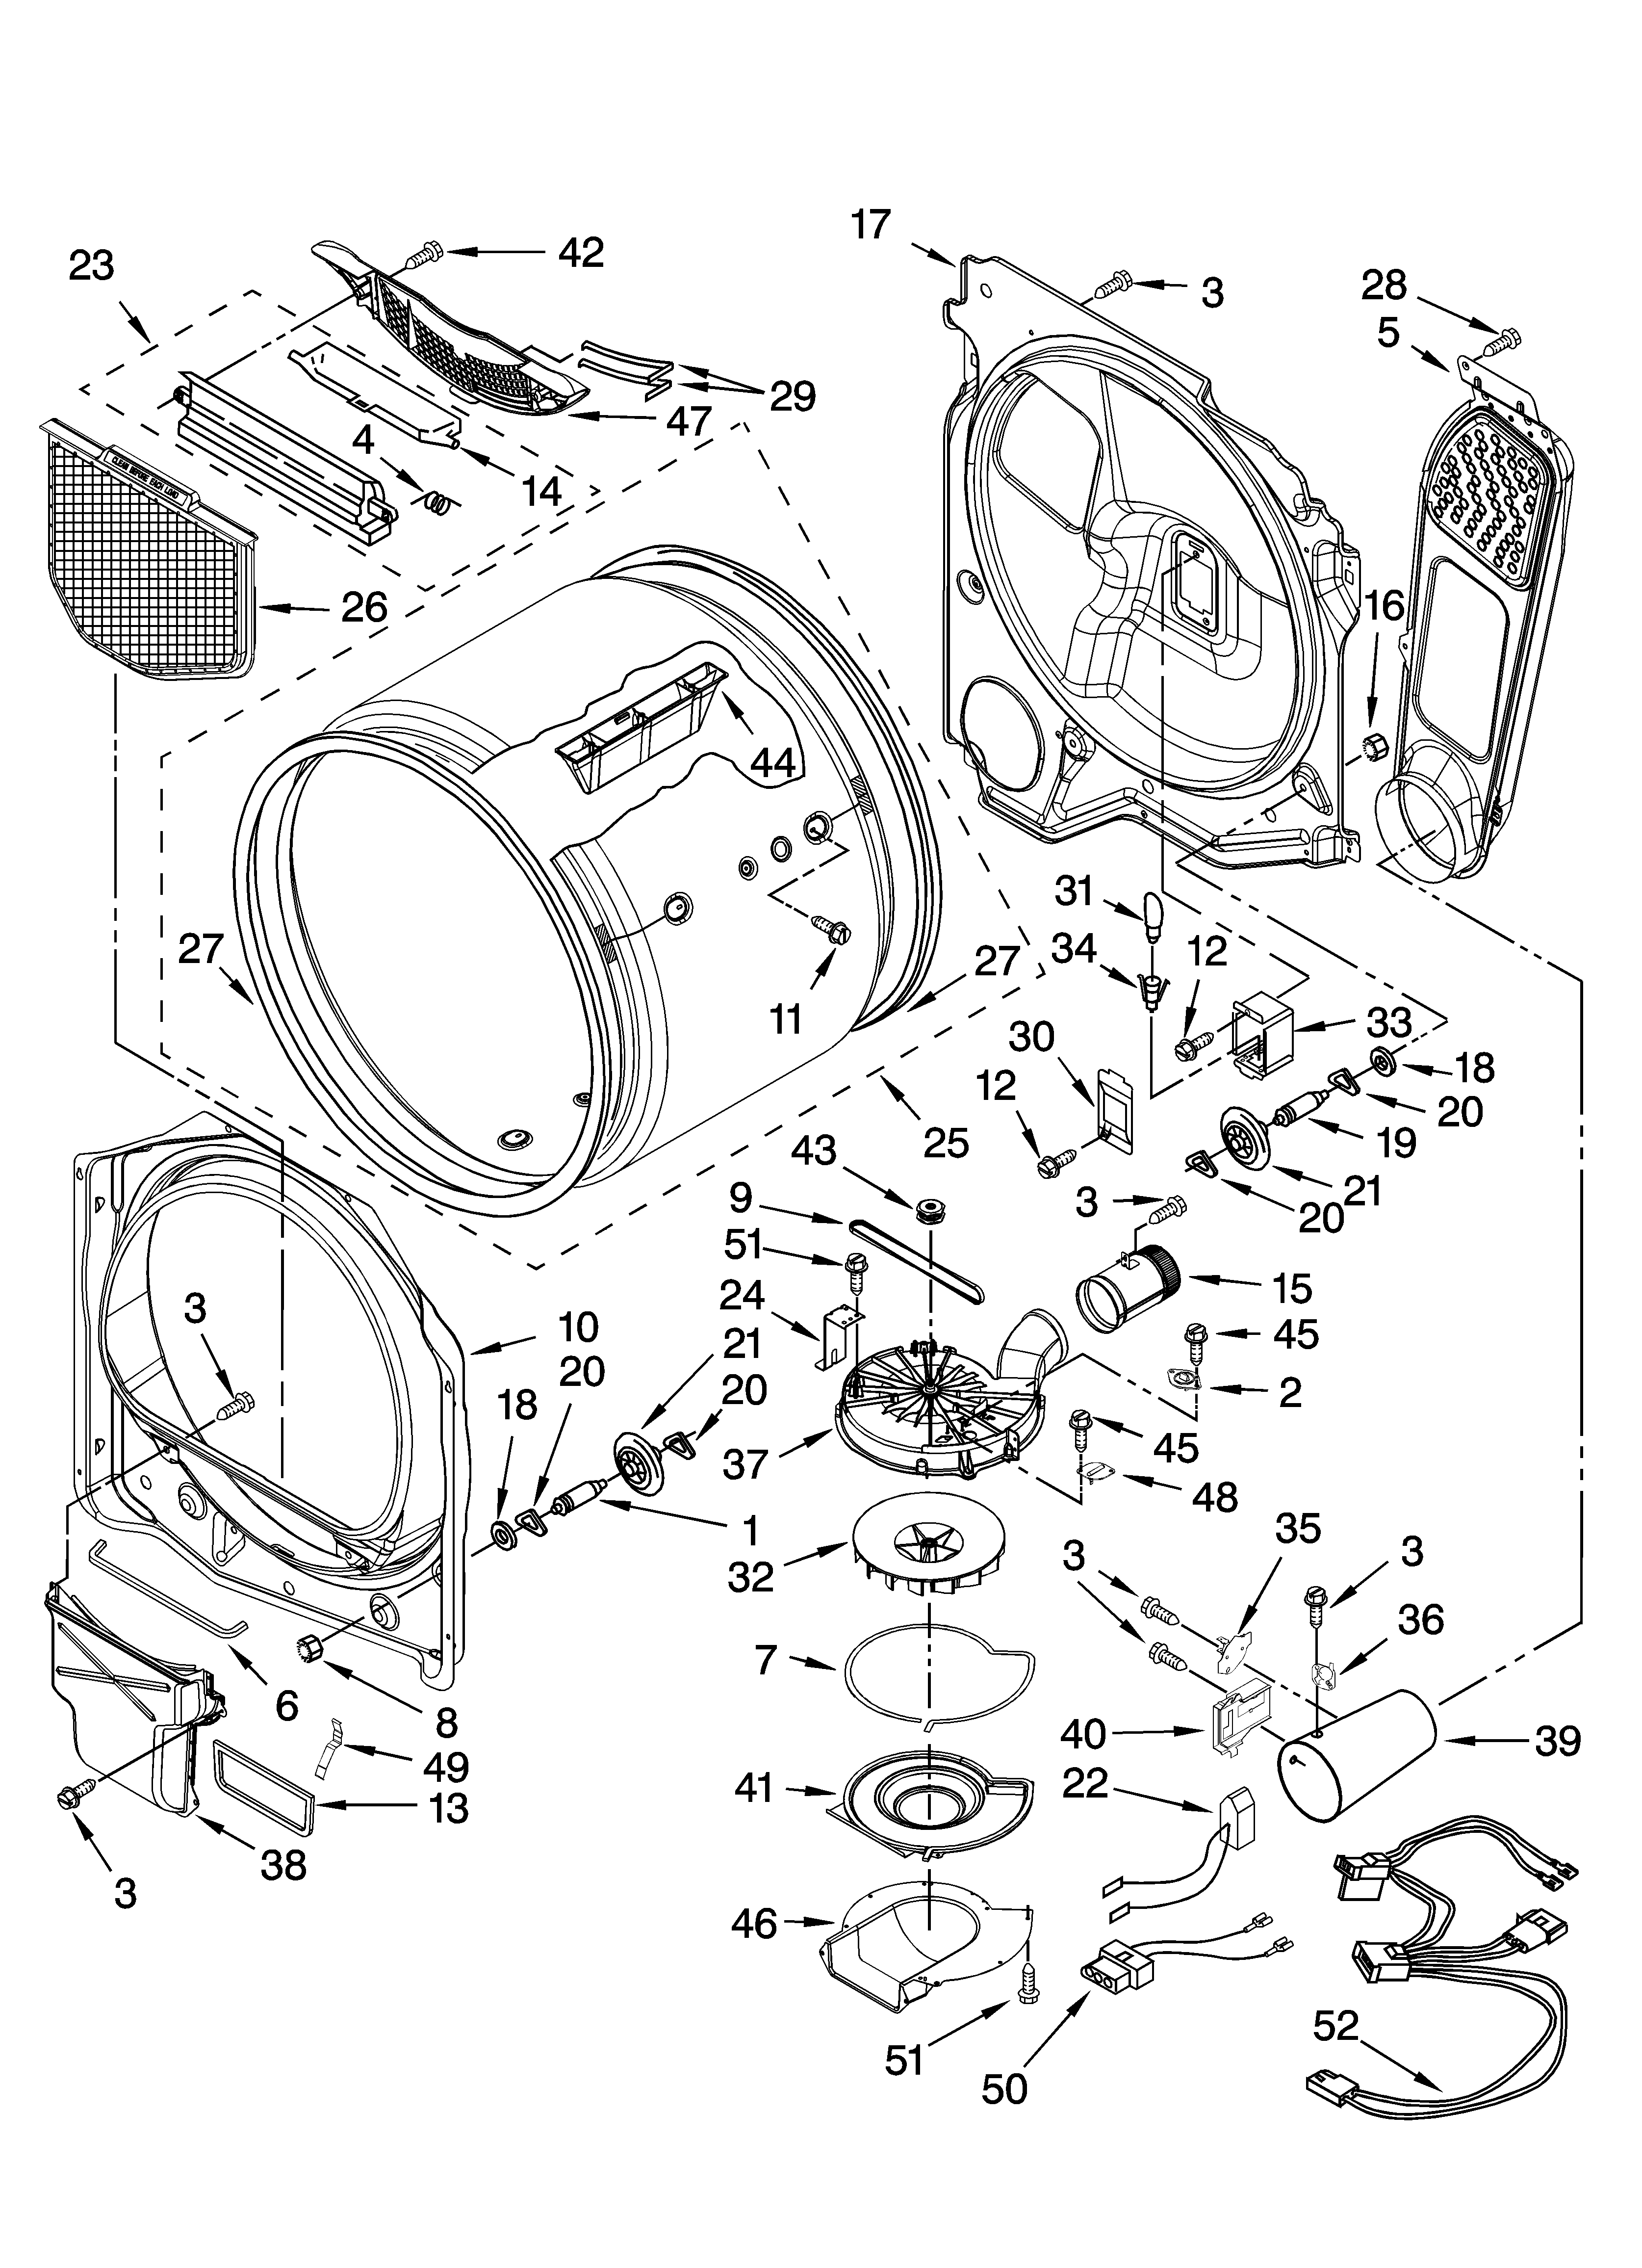 Maytag Dryers Electric Diagrams